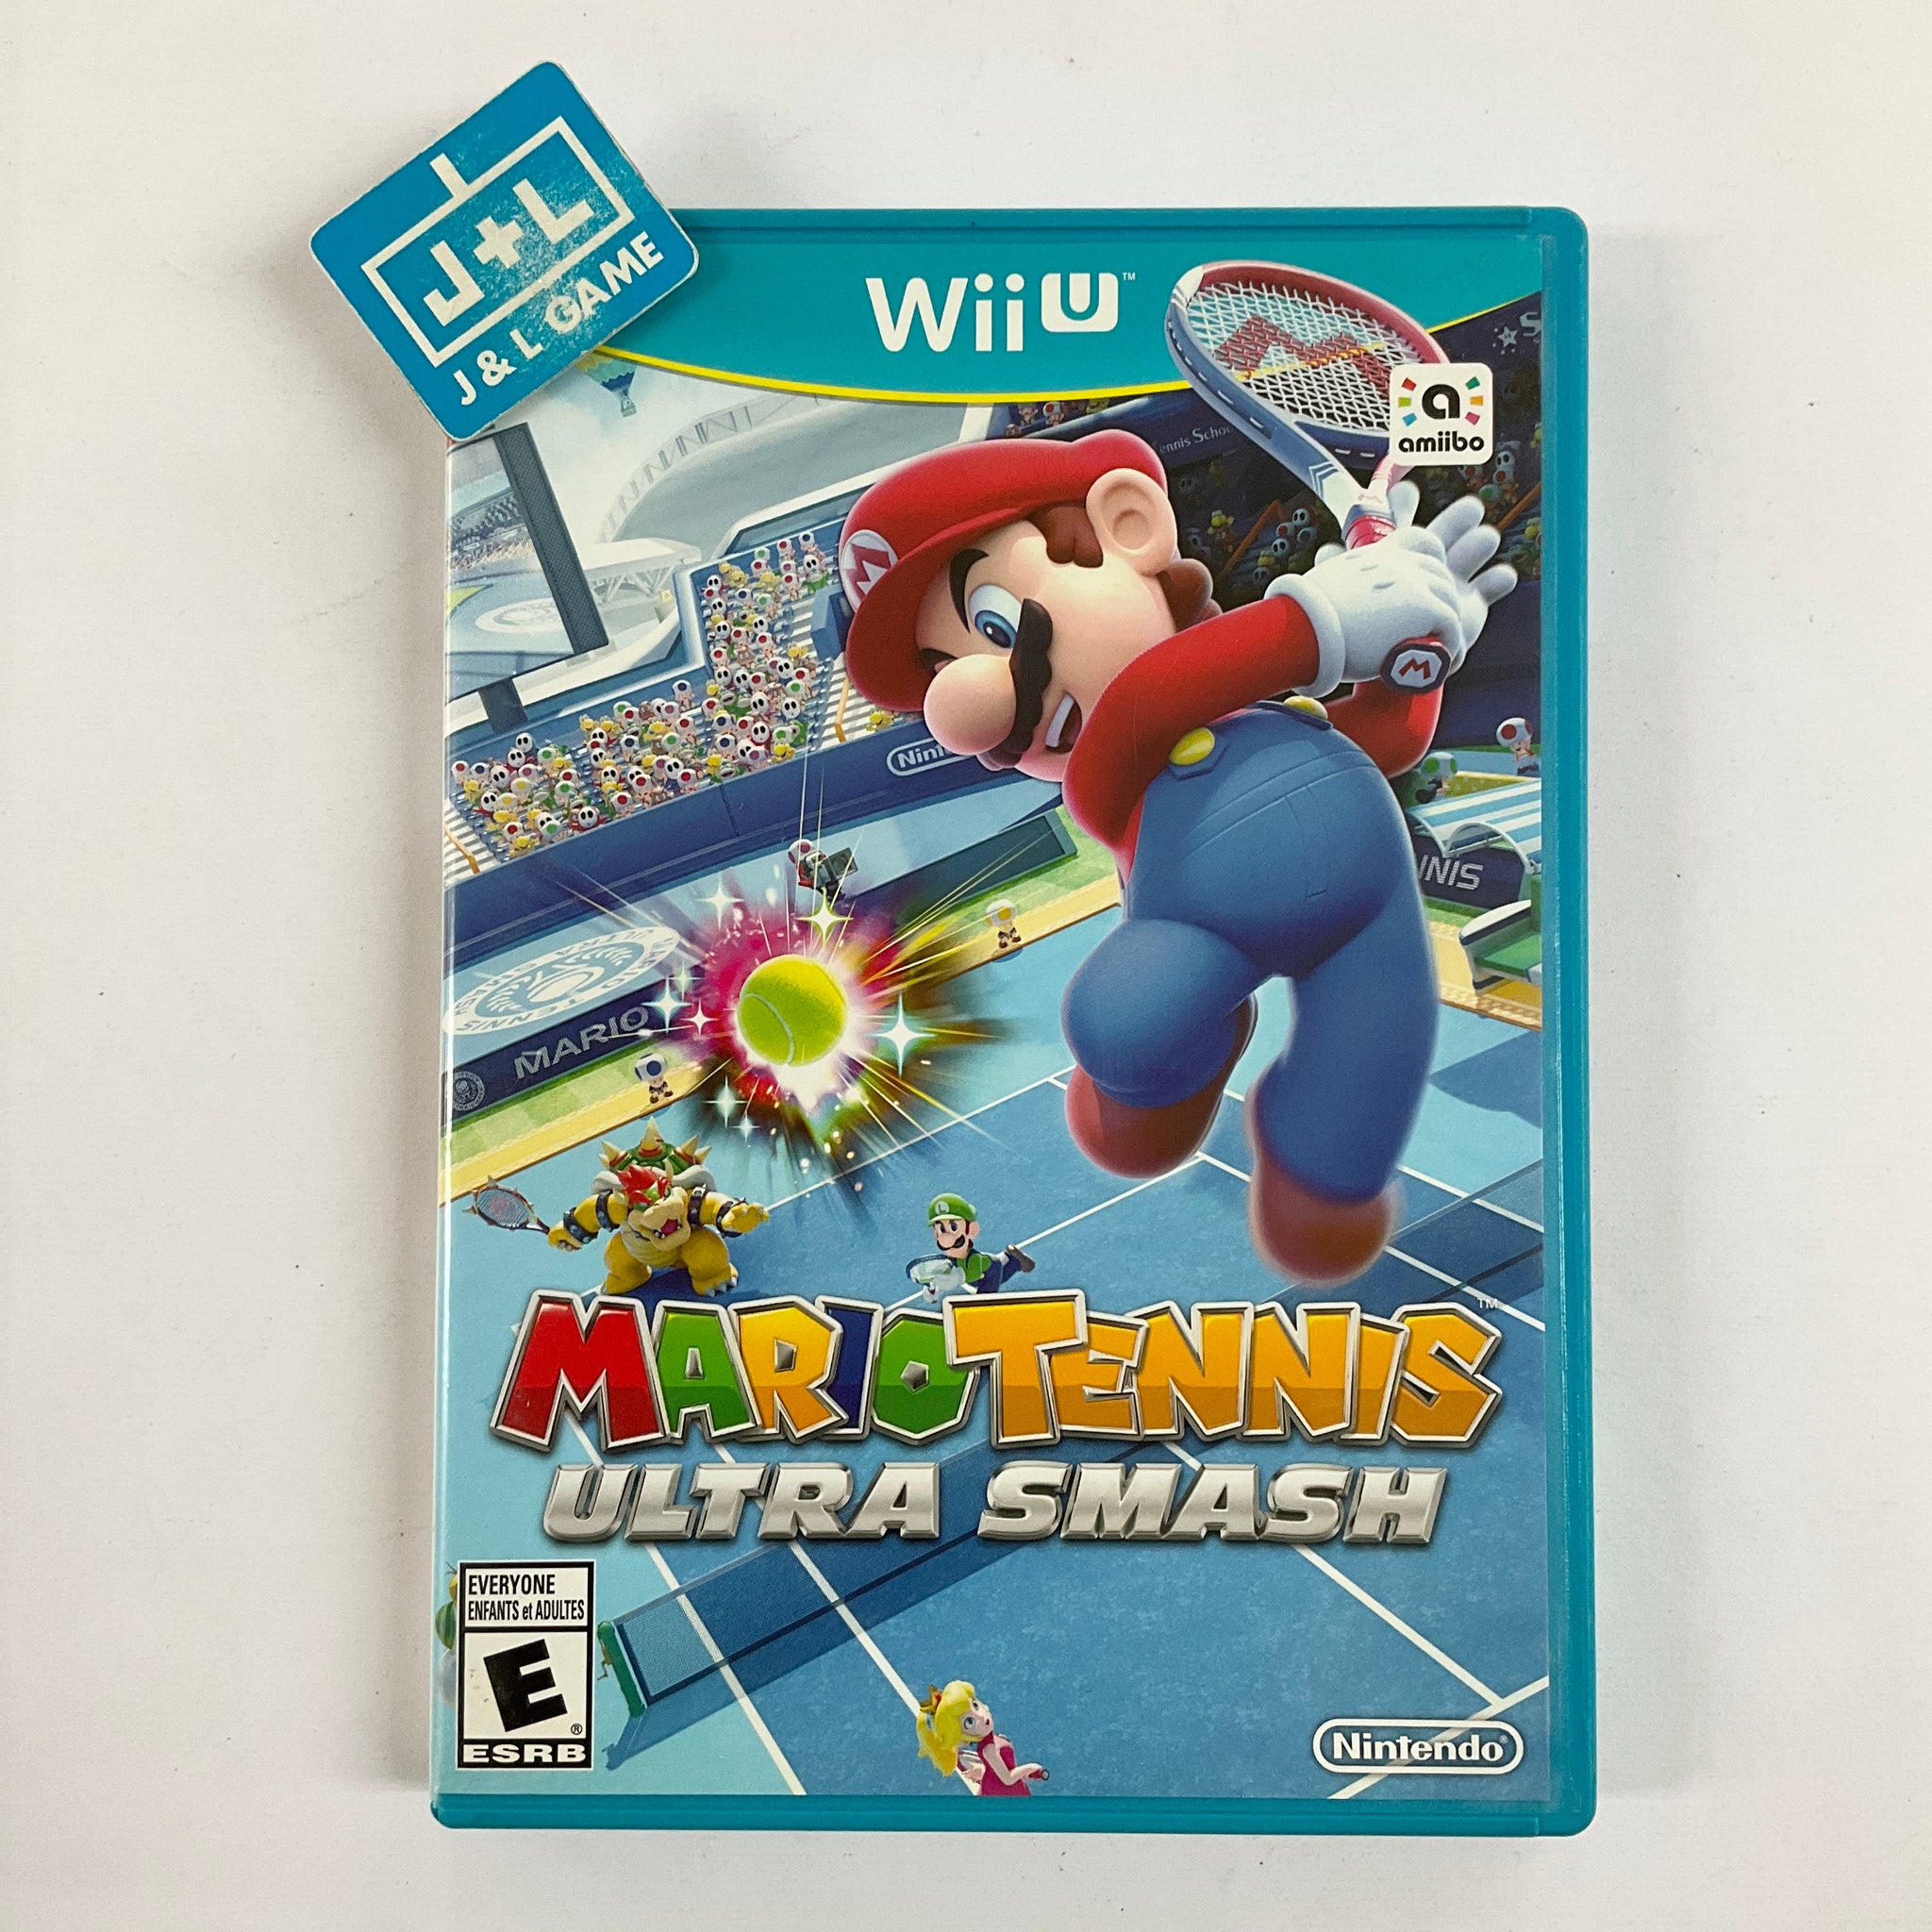 Mario Tennis: Ultra Smash - Nintendo Wii U [Pre-Owned]